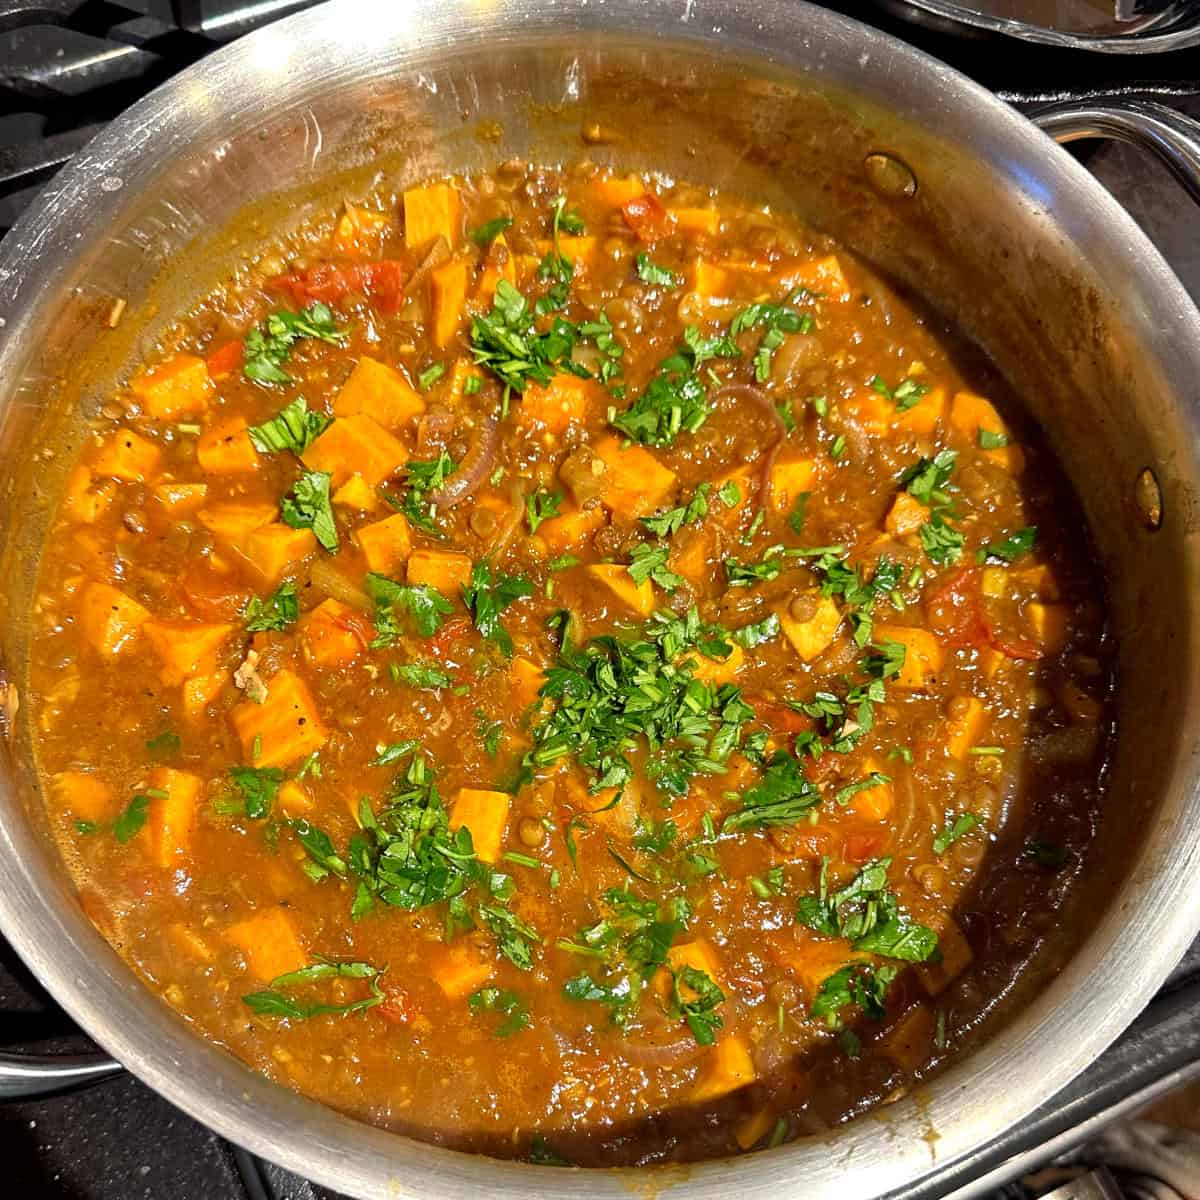 Parsley sprinkled over cooked lentil sweet potato tagine in steel pot.